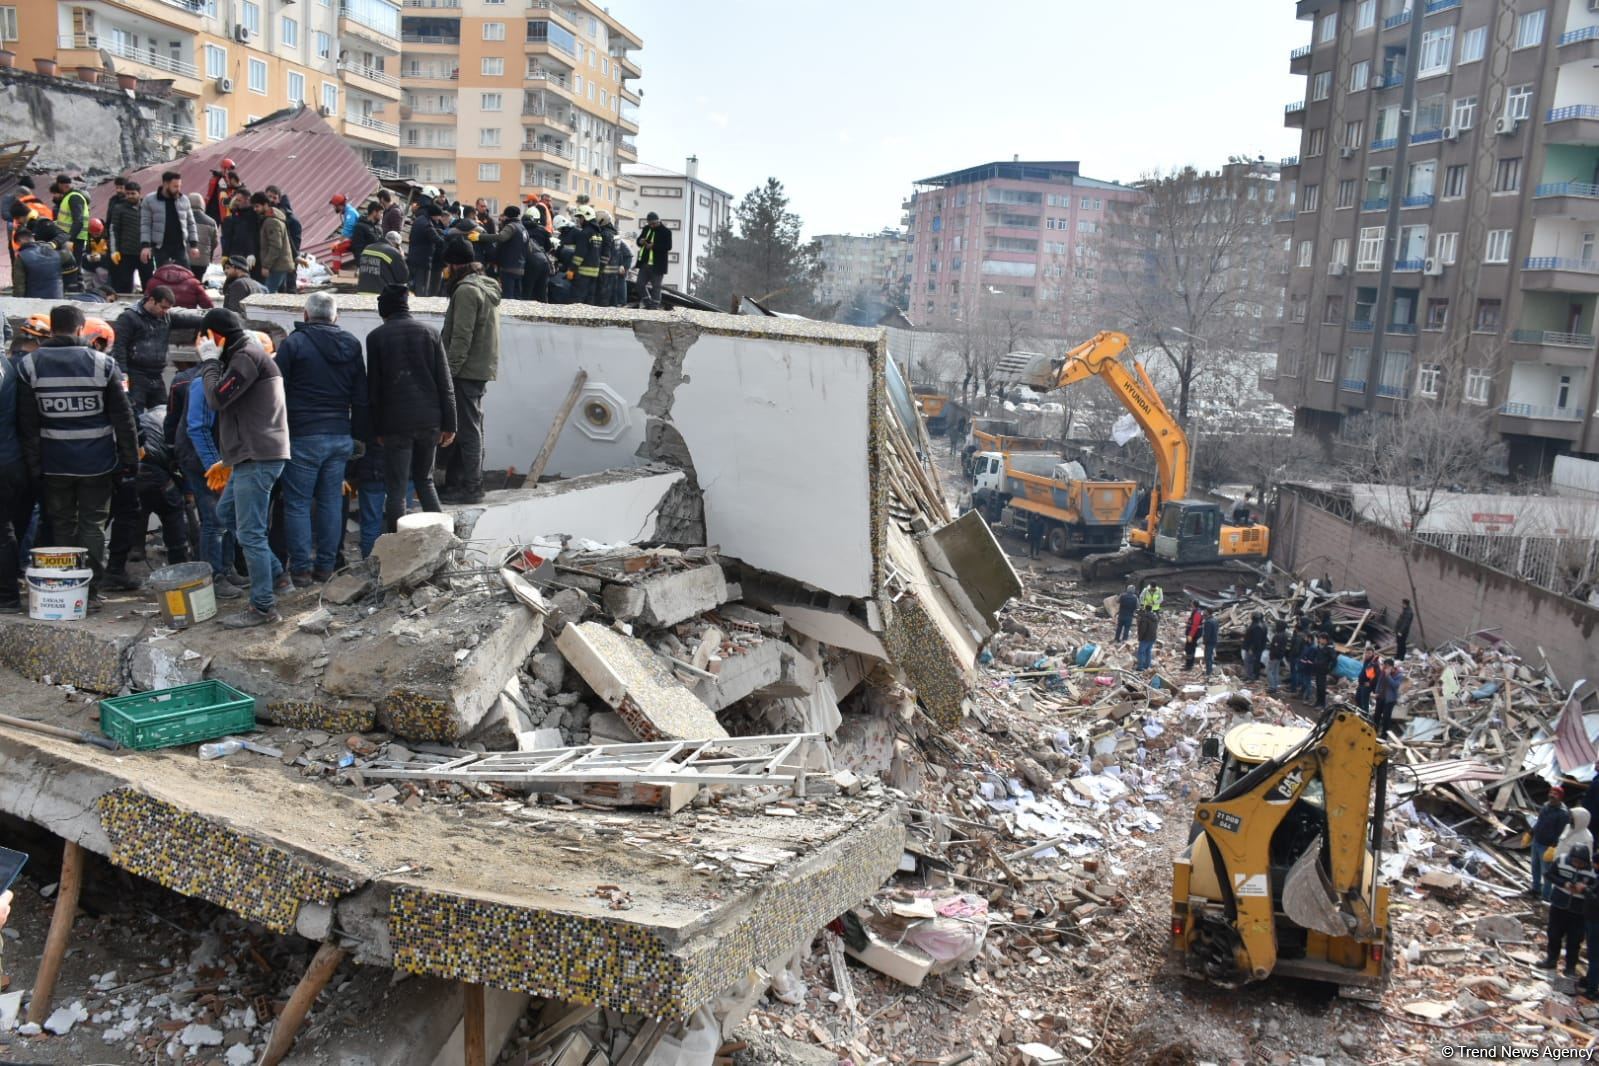 Türkiye earthquake death toll jumps to over 31,600